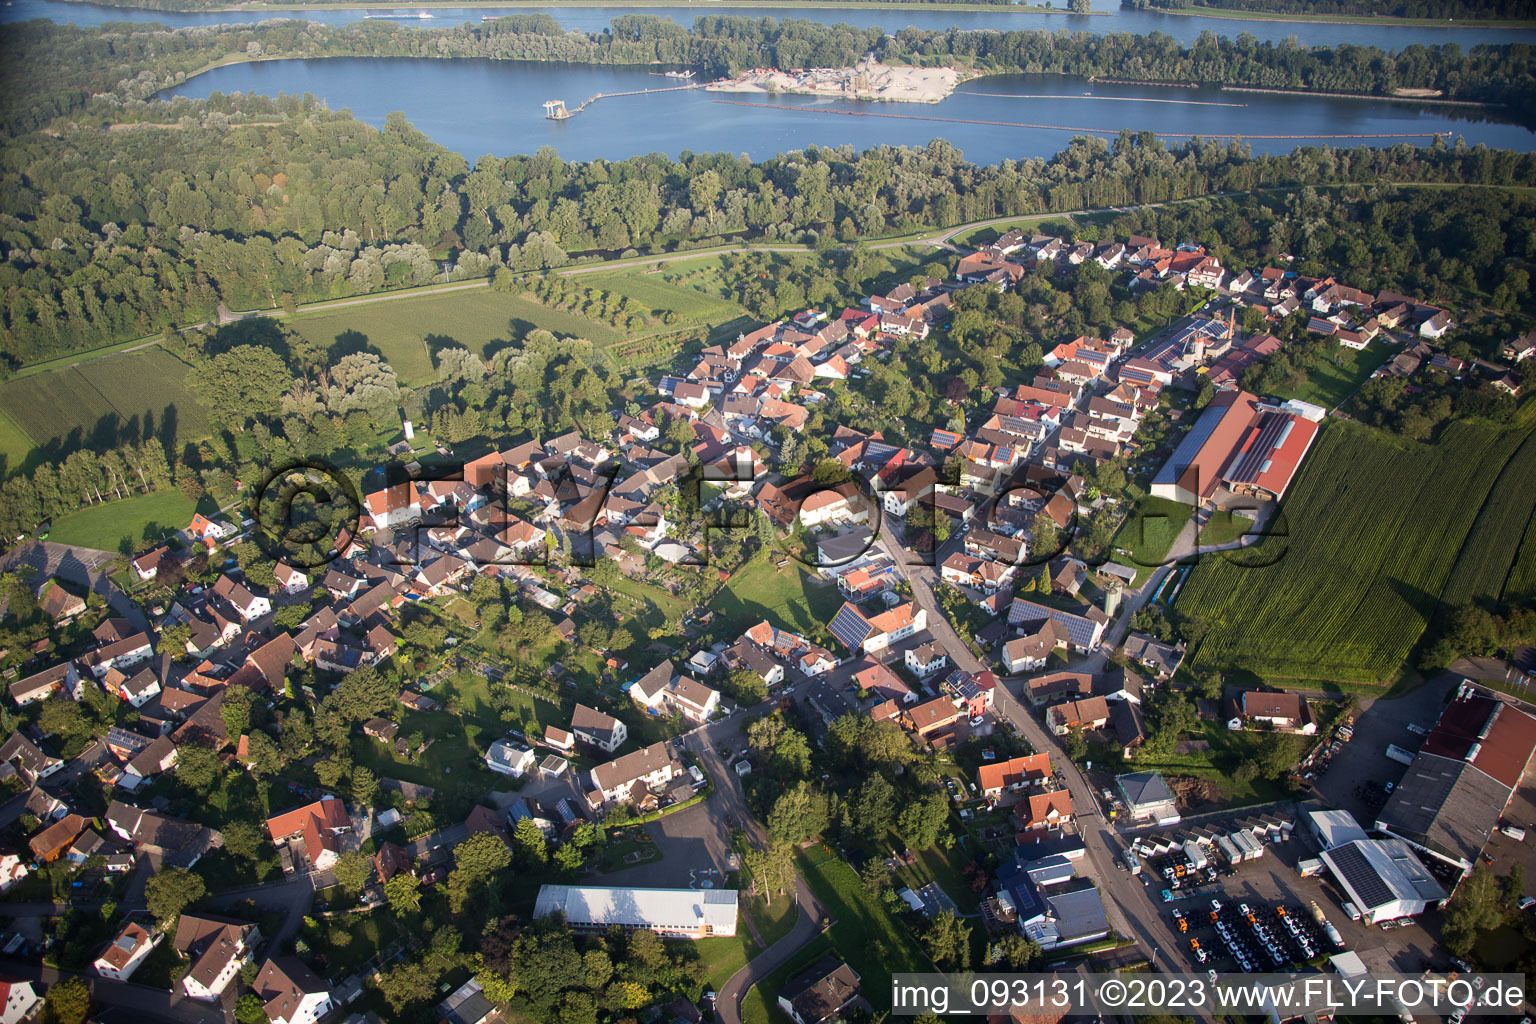 Aerial photograpy of District Helmlingen in Rheinau in the state Baden-Wuerttemberg, Germany